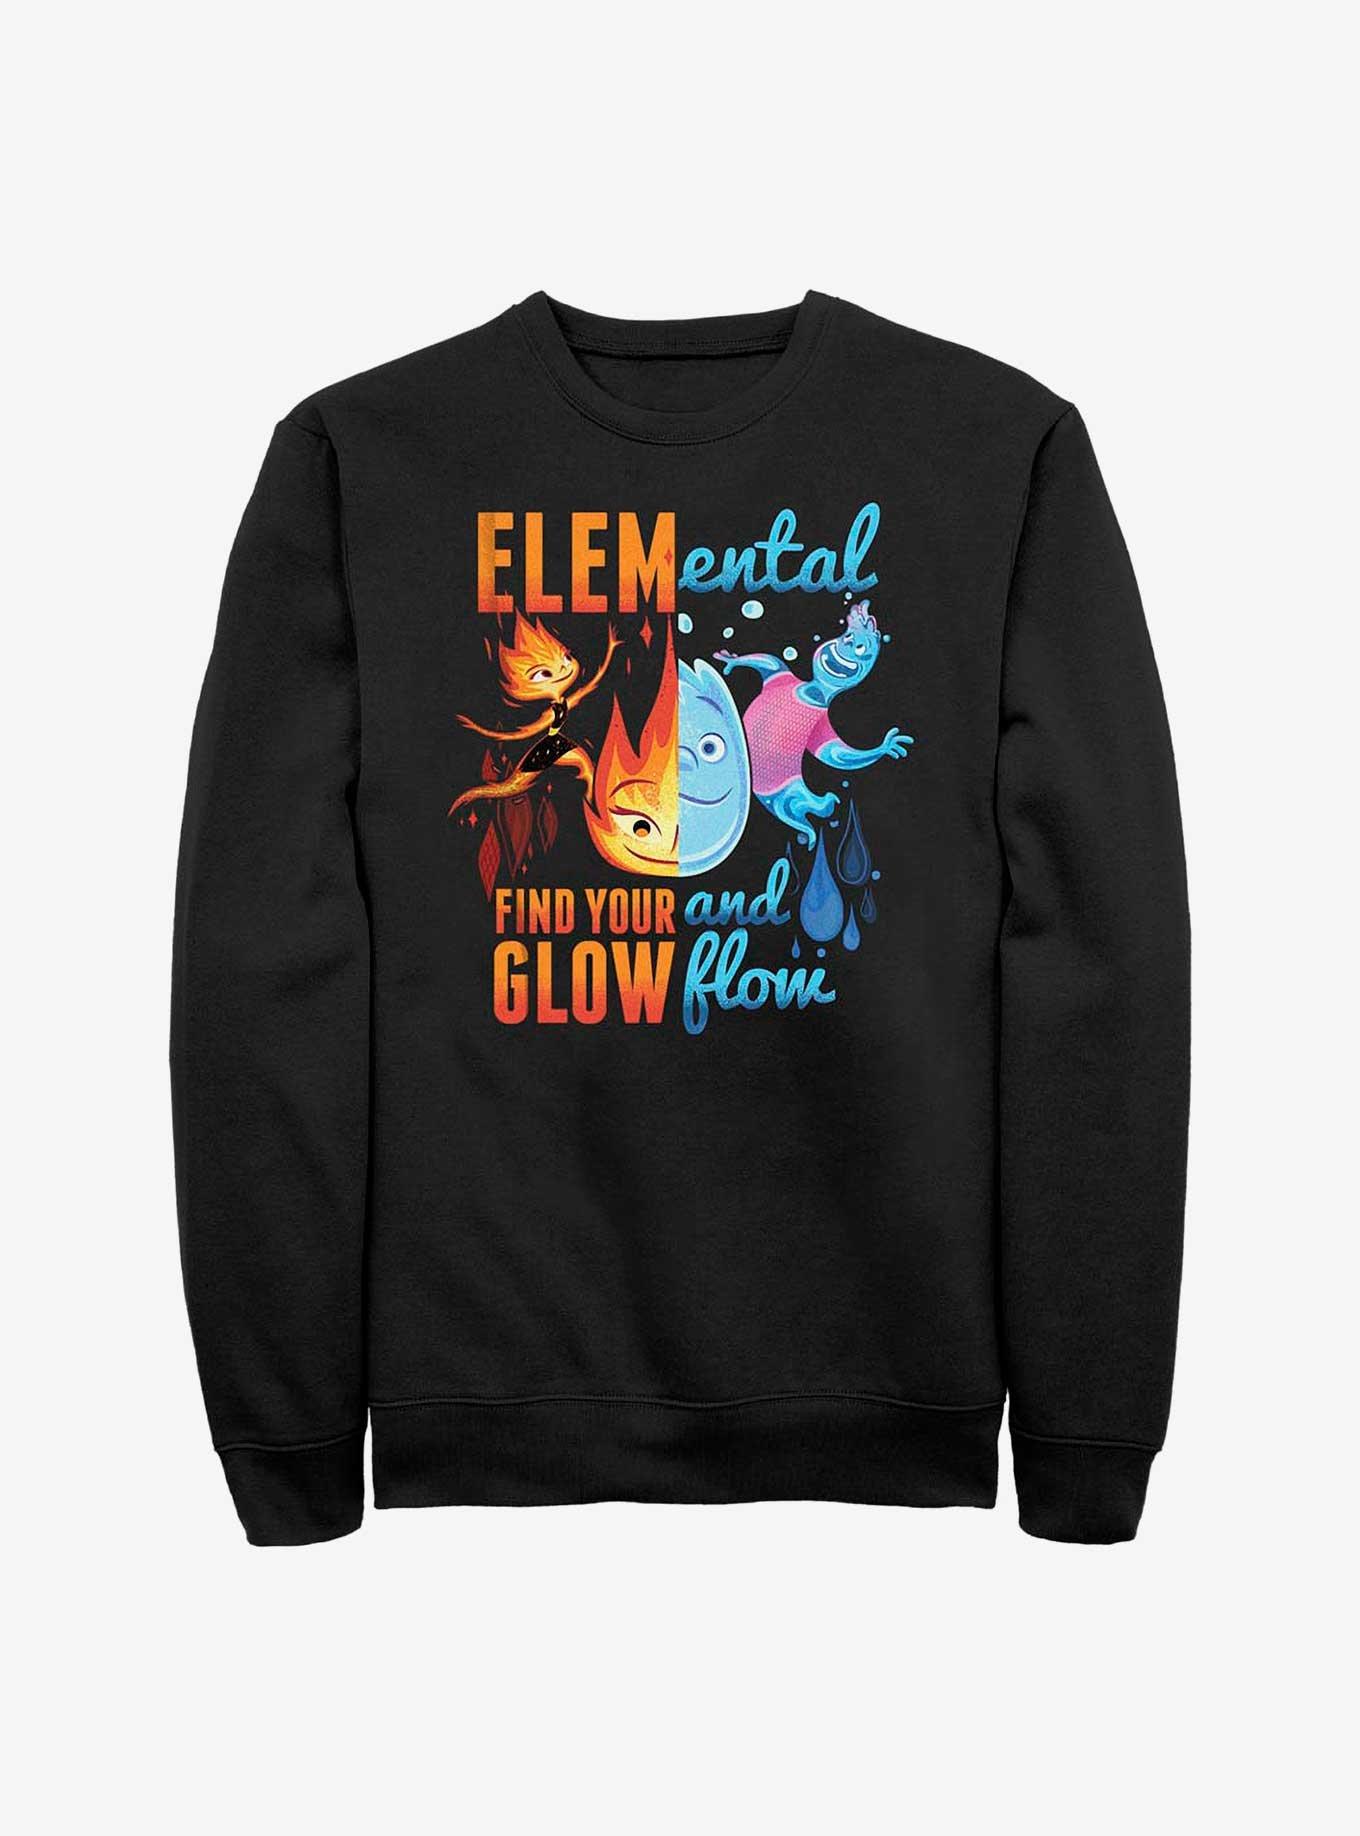 Disney Pixar Elemental Ember and Wade Find Your Glow Flow Sweatshirt